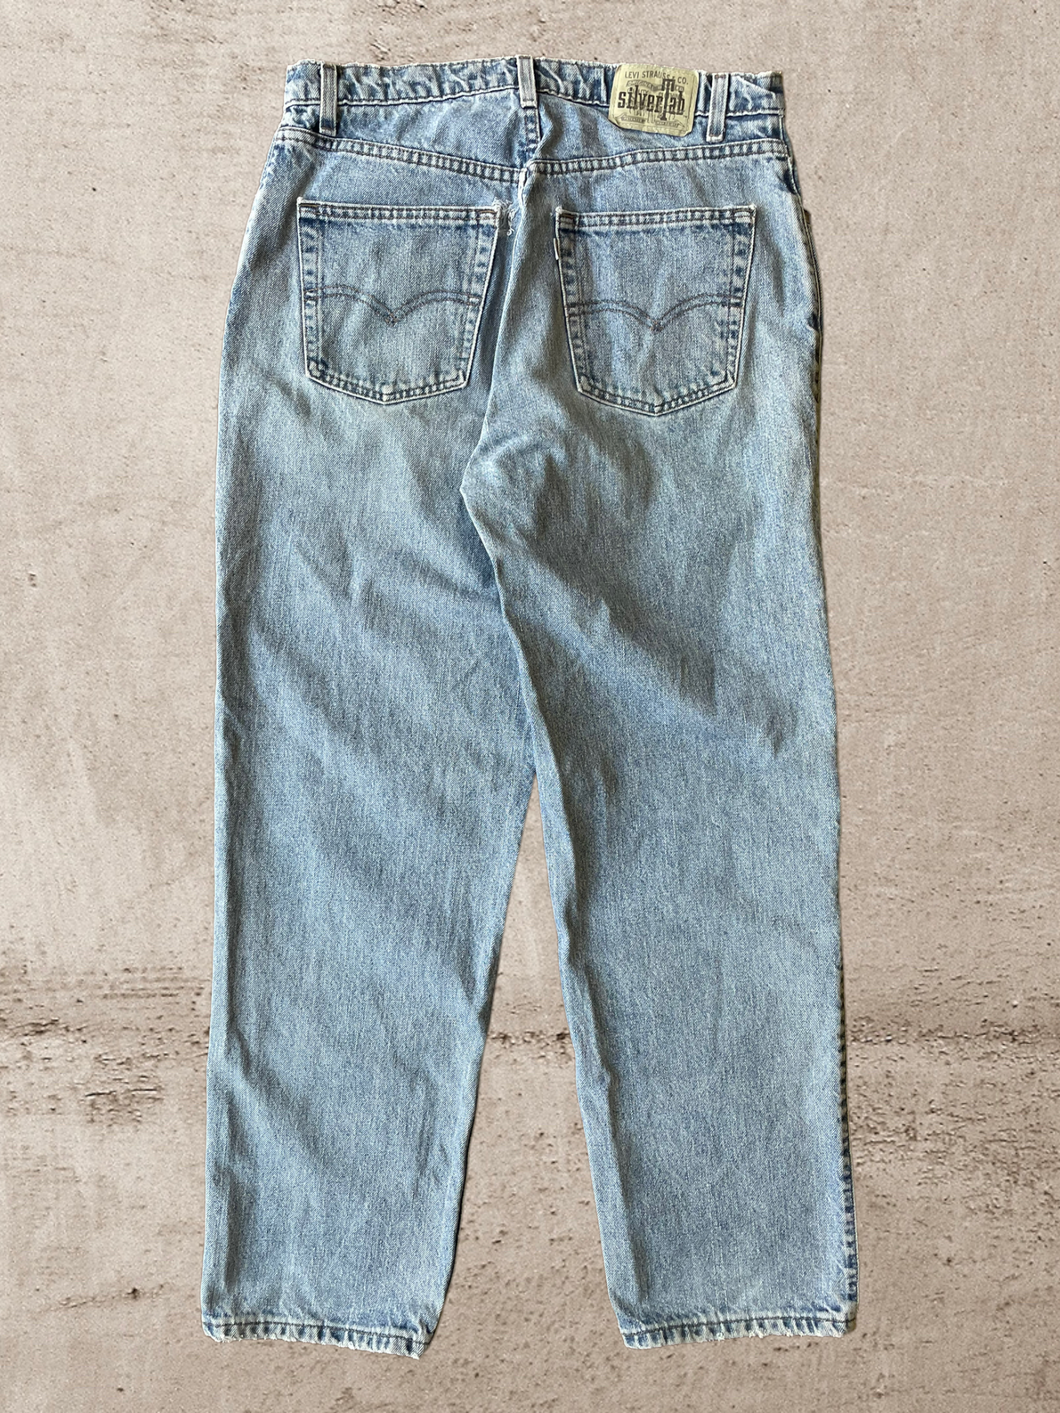 90s Levi Silvertab Baggy Jeans - 34x31